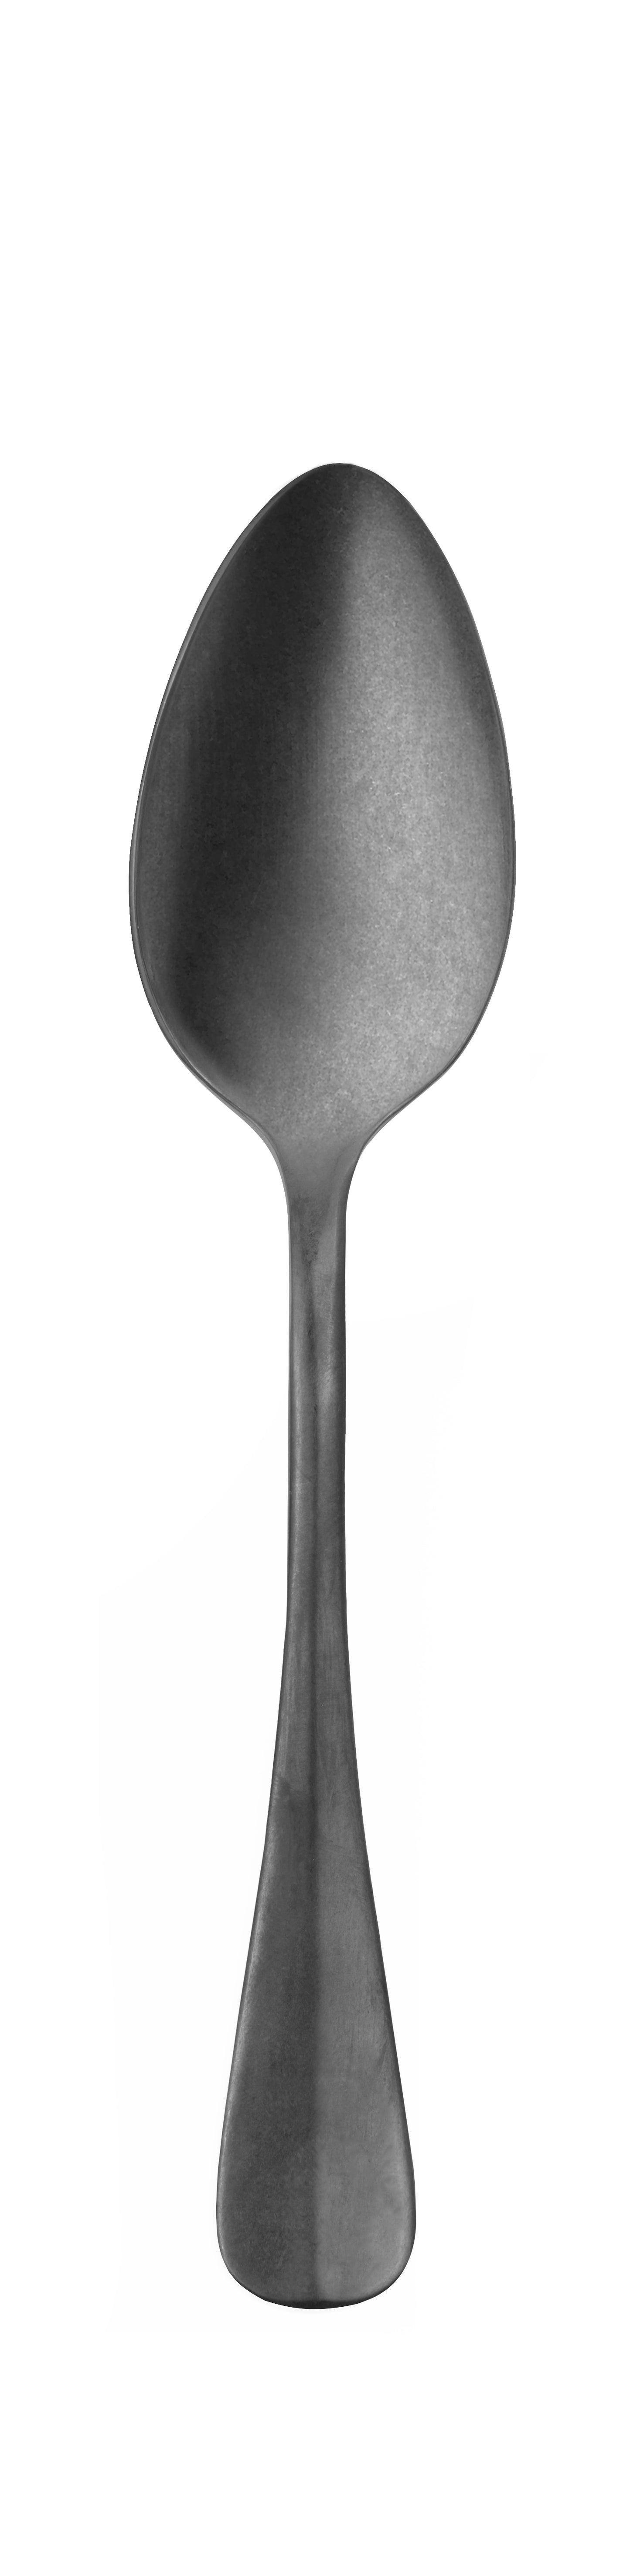 Dessert spoon BAGUETTE PVD gun metal stonewashed 183mm